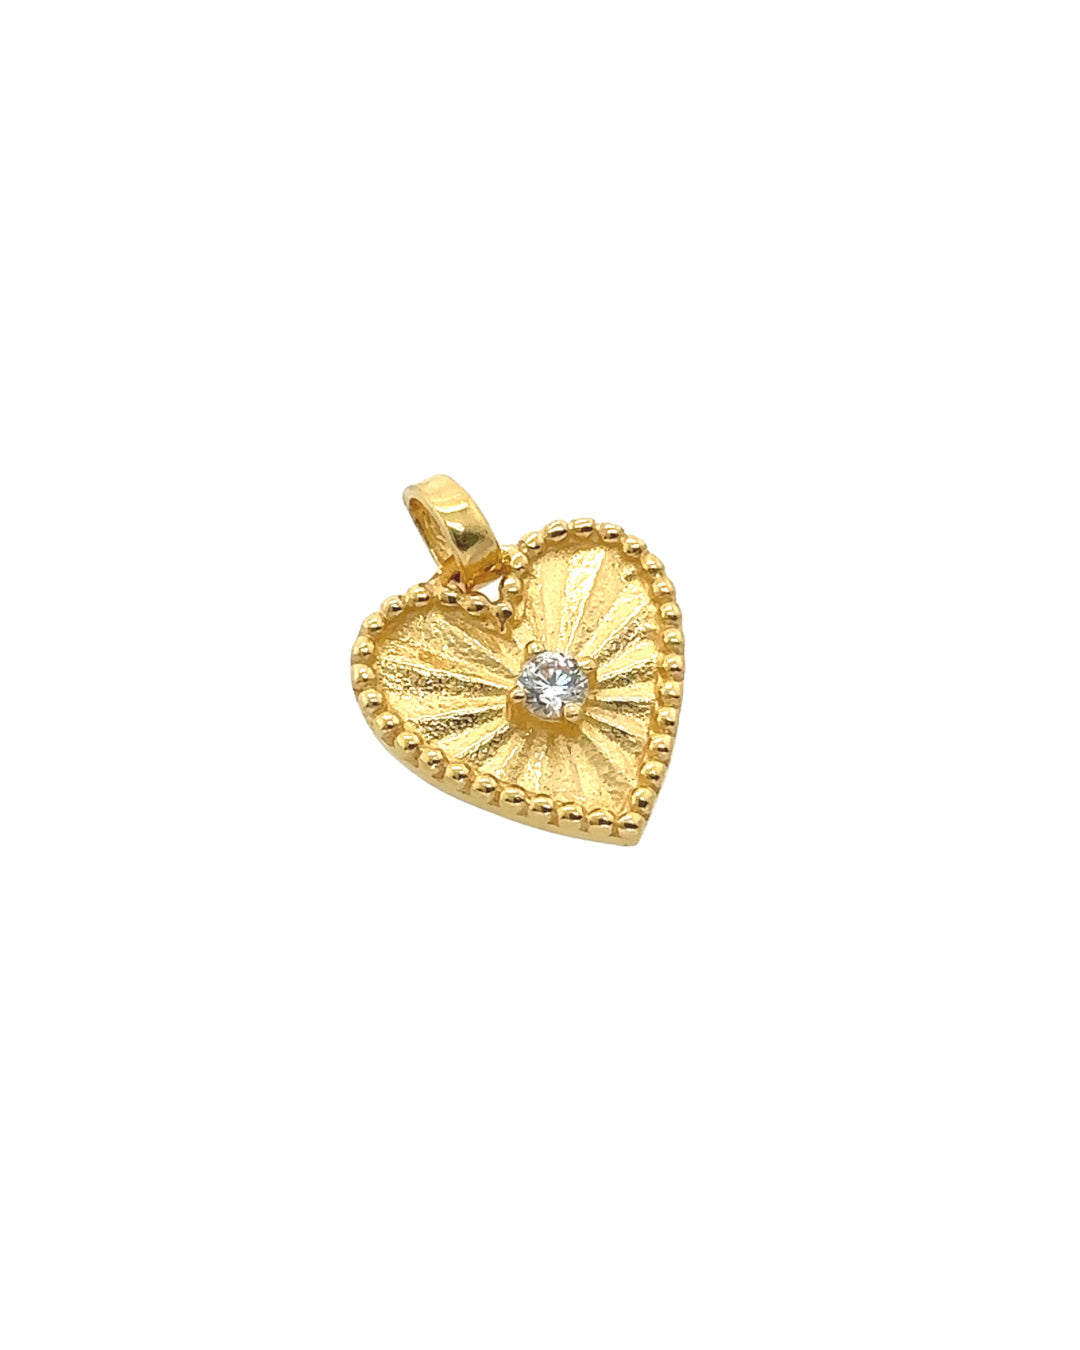 14k gold fill love heart pendant with diamond cubic zirconia centre 